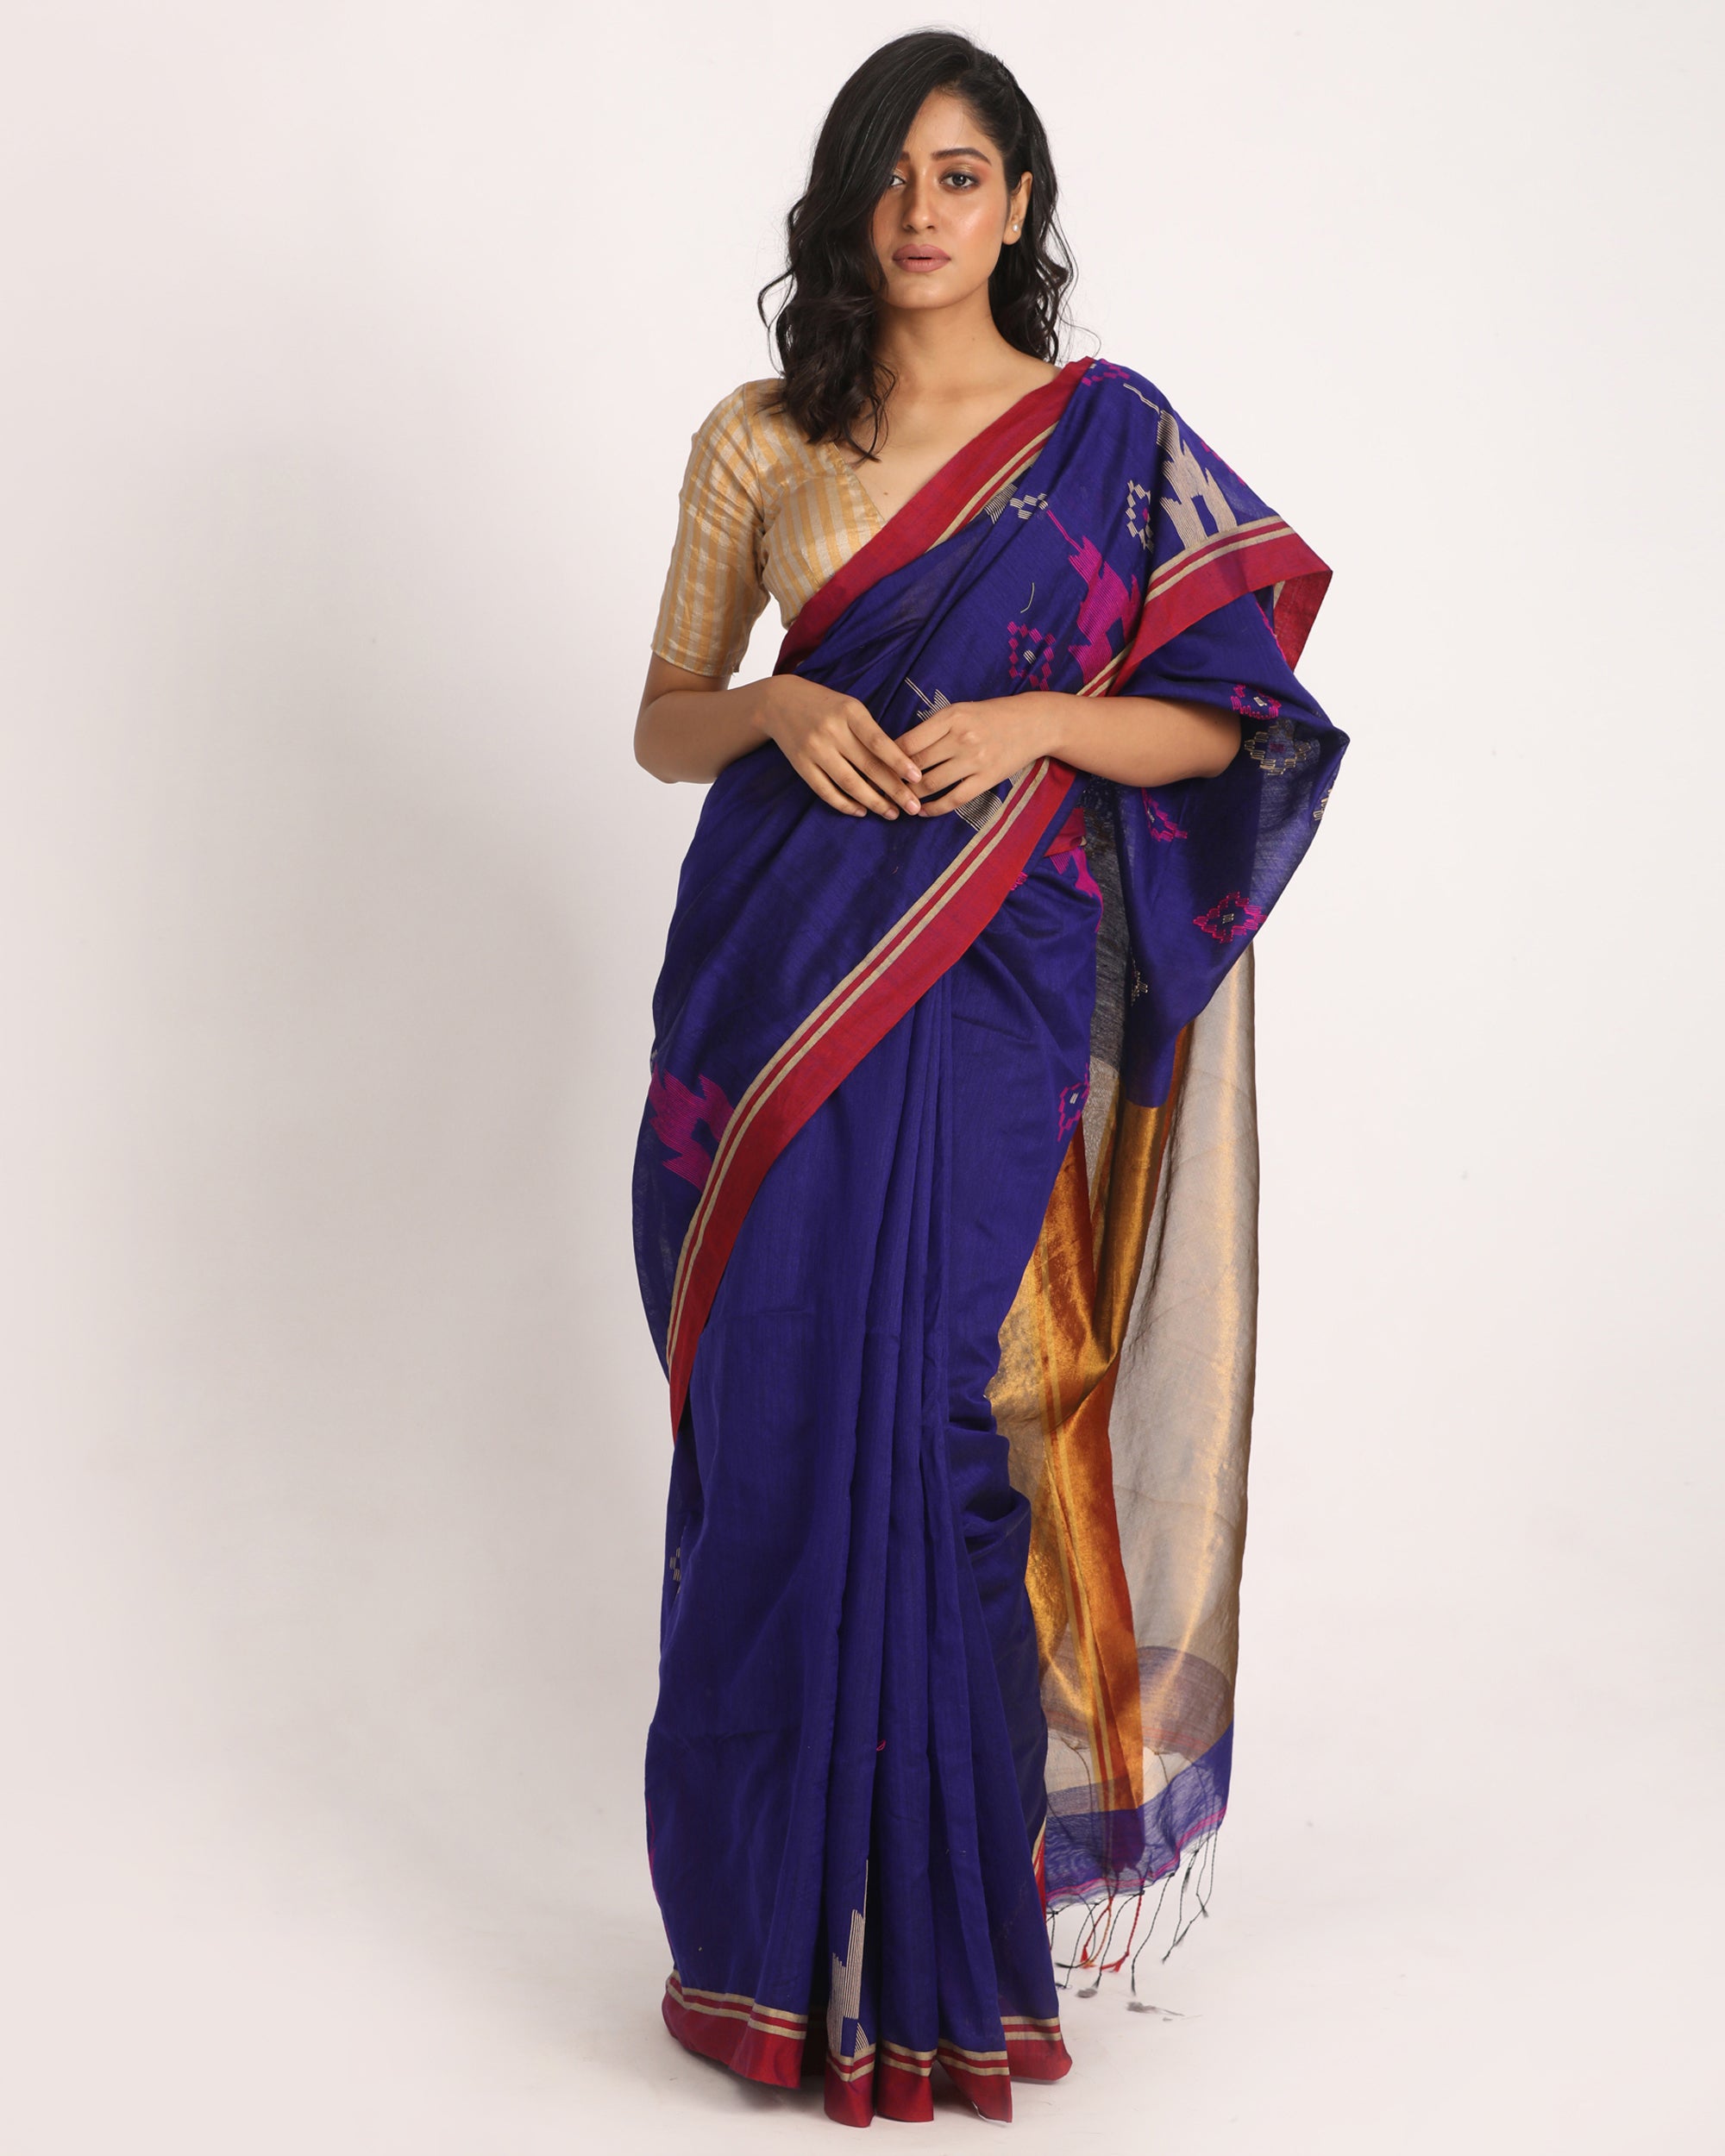 Women's Blue Cotton Blend Handloom Saree - Piyari Fashion